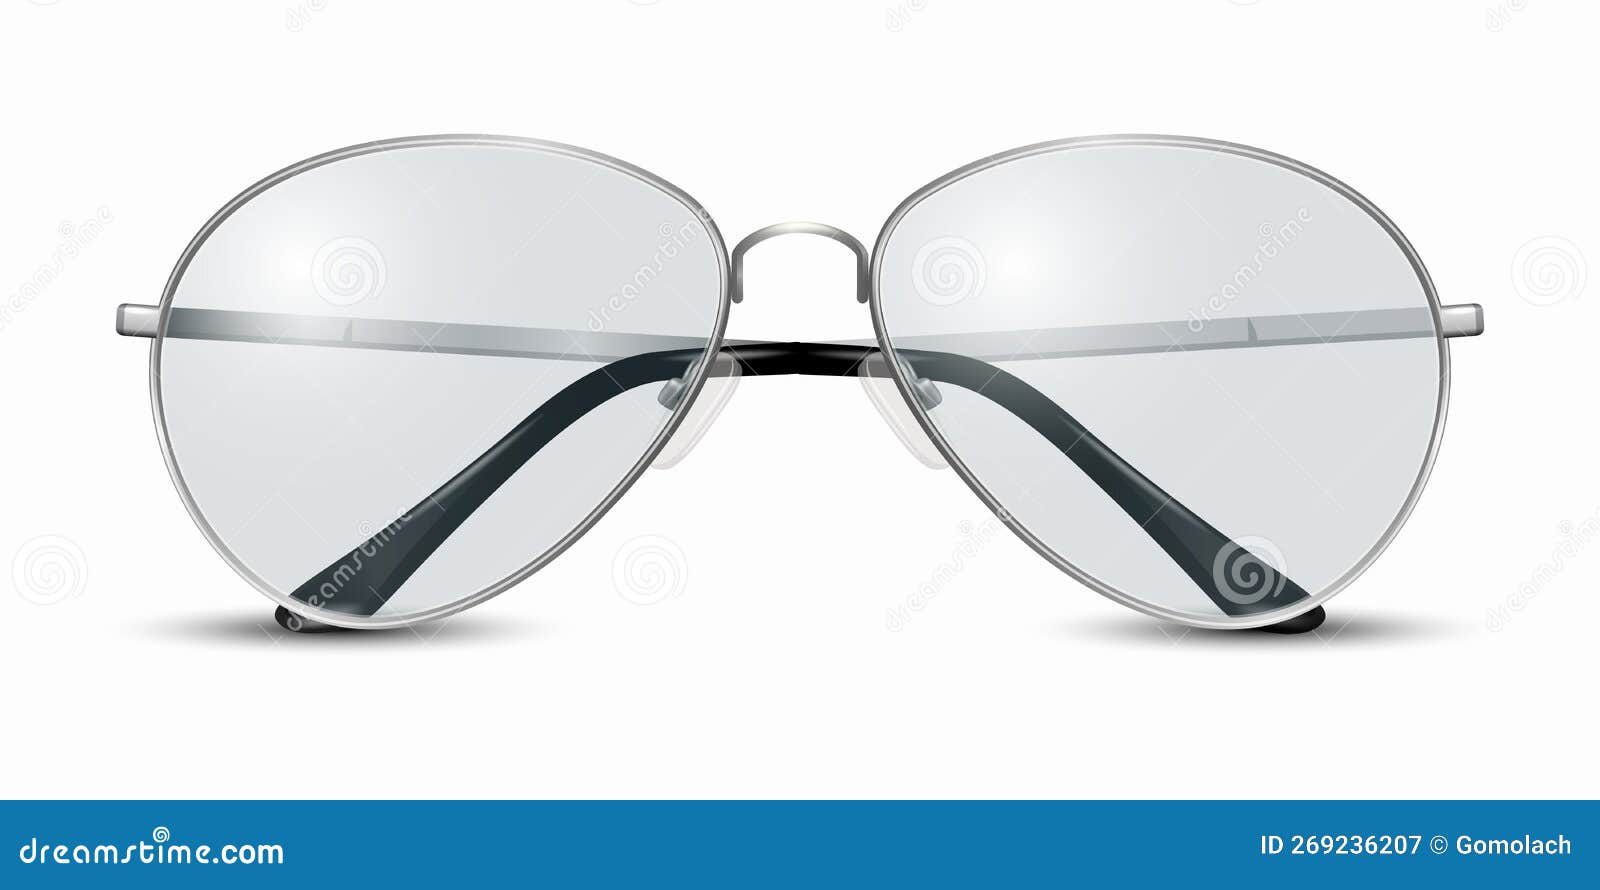 Buy OLINOWL Rimless Sunglasses Oversized Colored Transparent Round Eyewear  Retro Eyeglasses for Women Men … … at Amazon.in